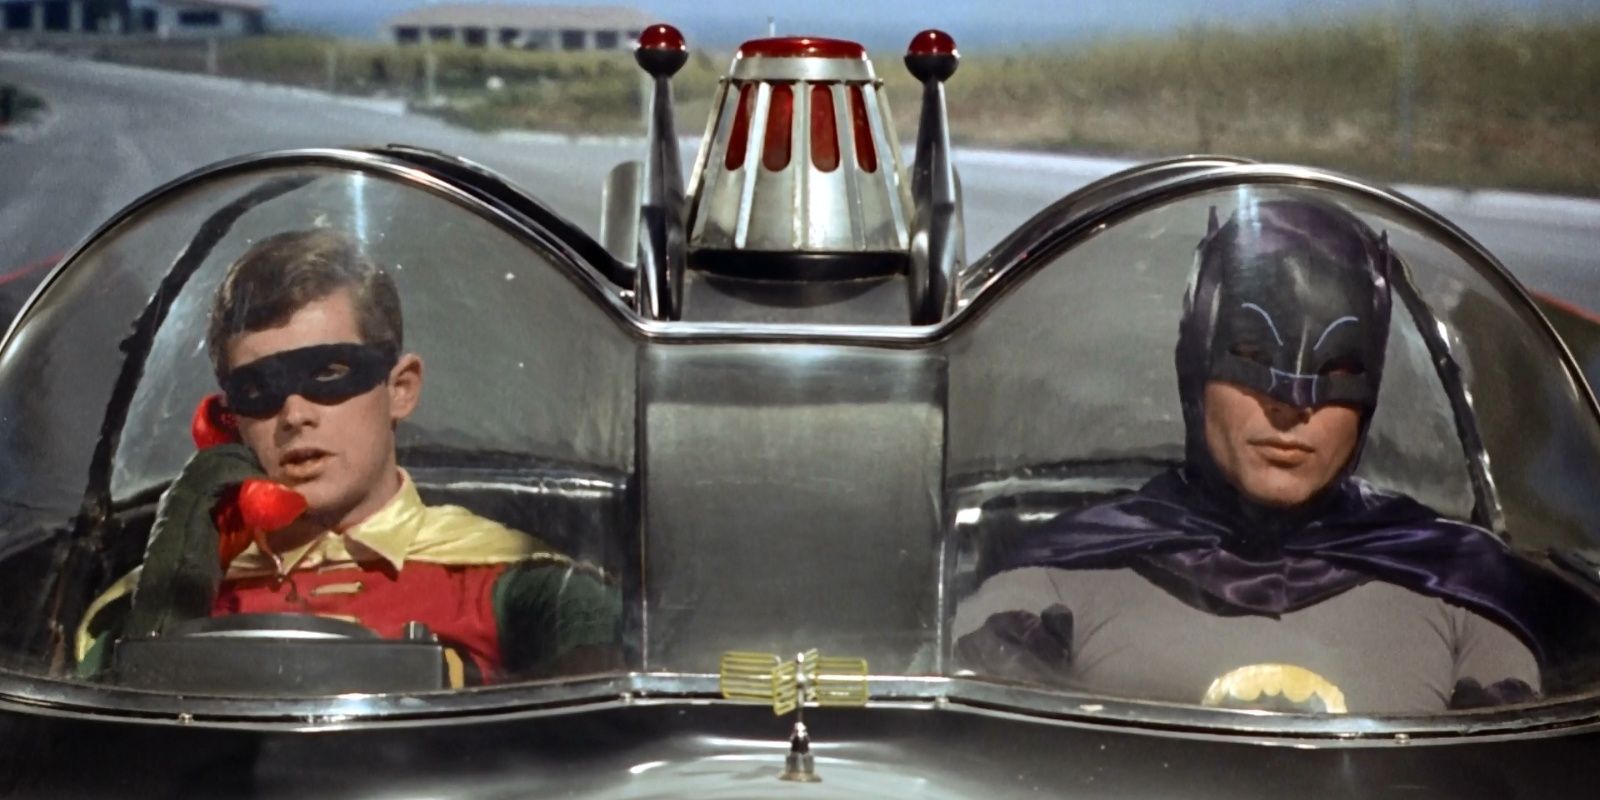 Batman and Robin ride in the Batmobile in 1966 Batman movie